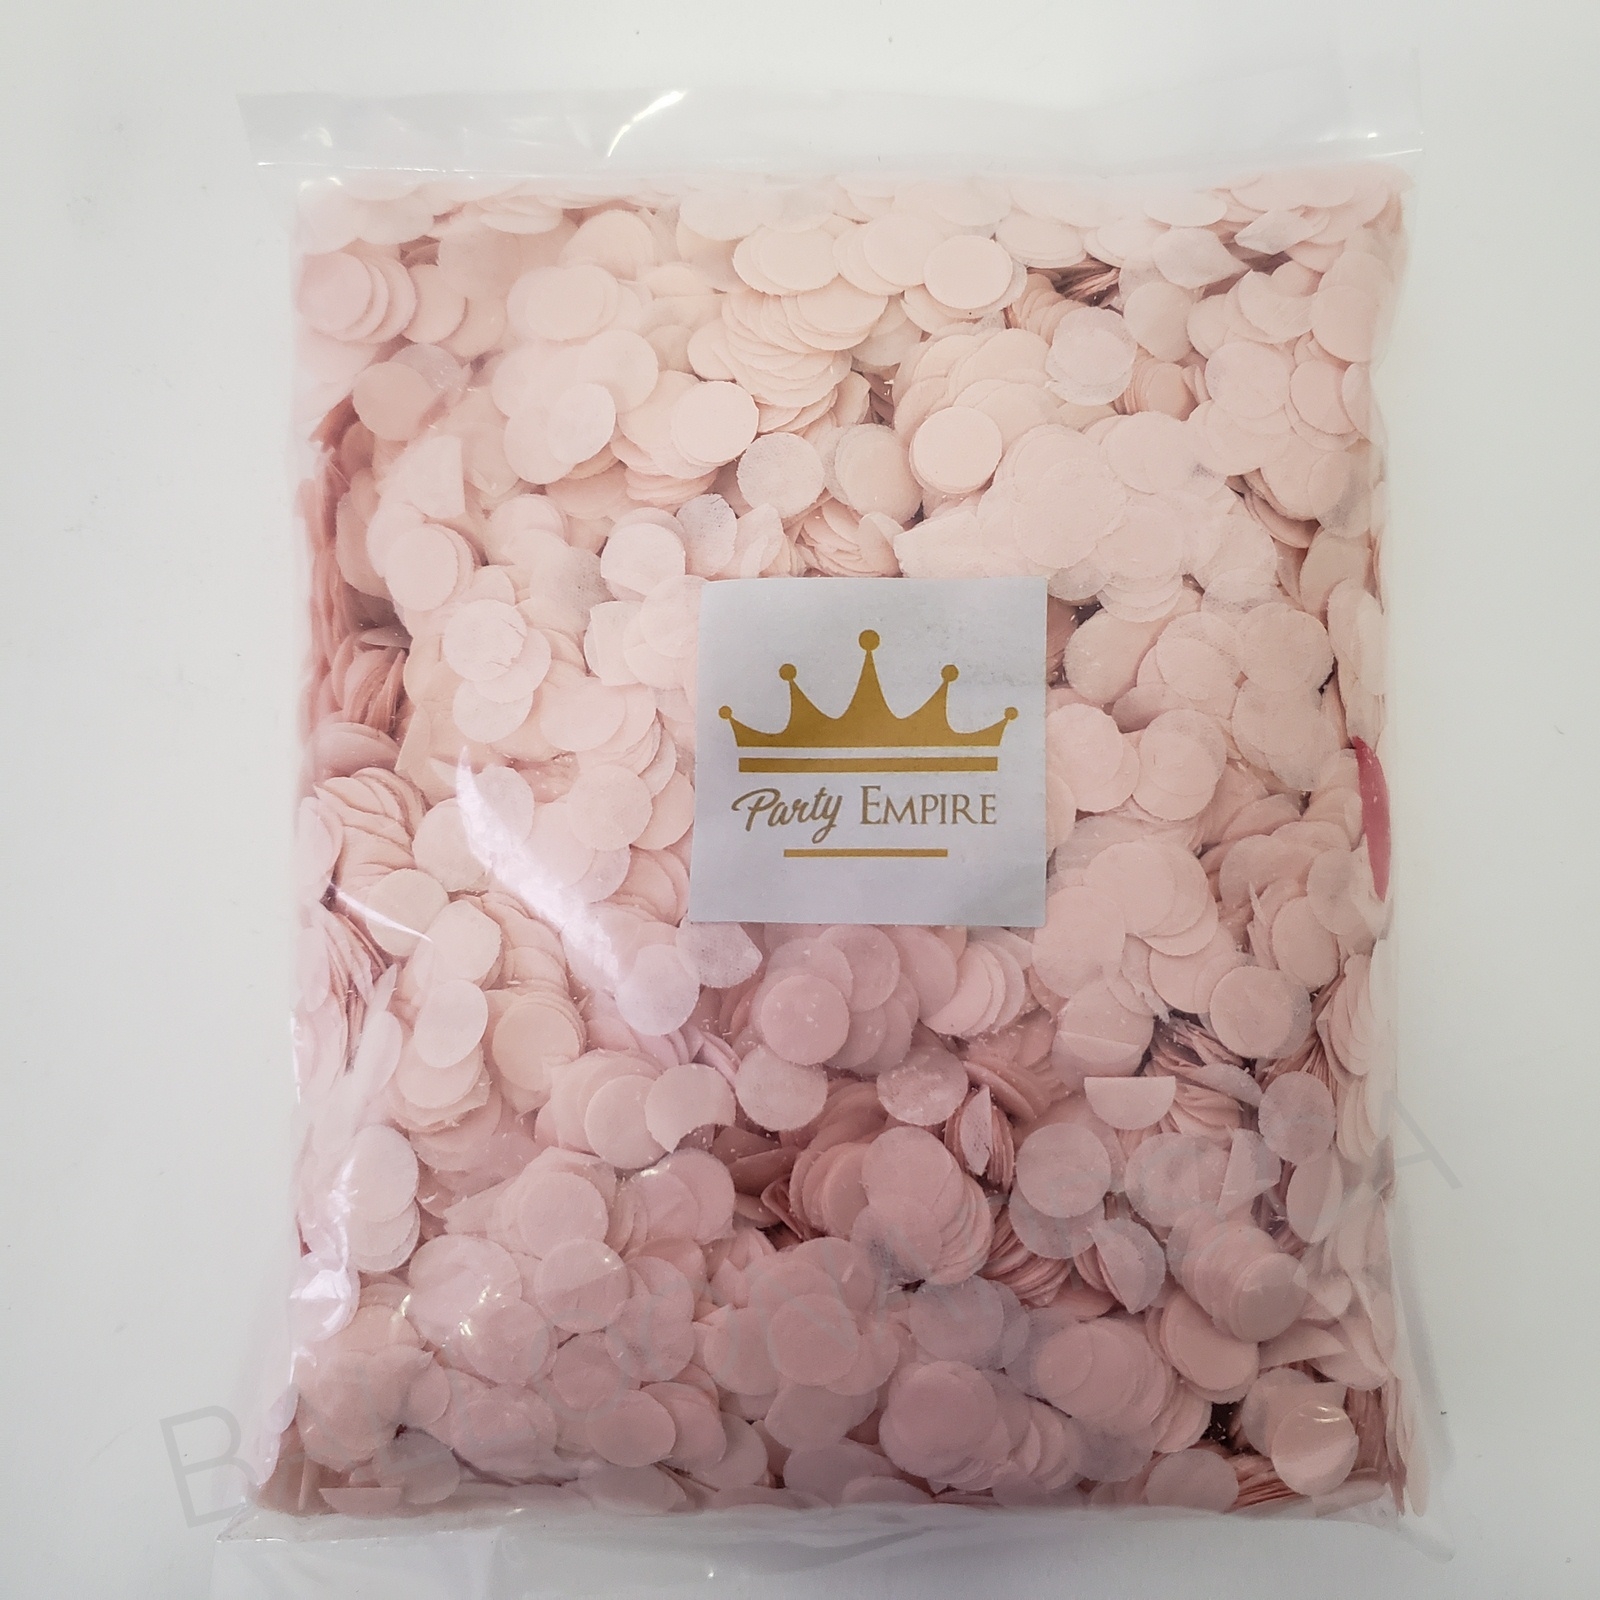 (100gr) 1cm Round Tissue Paper Light Pink Confetti